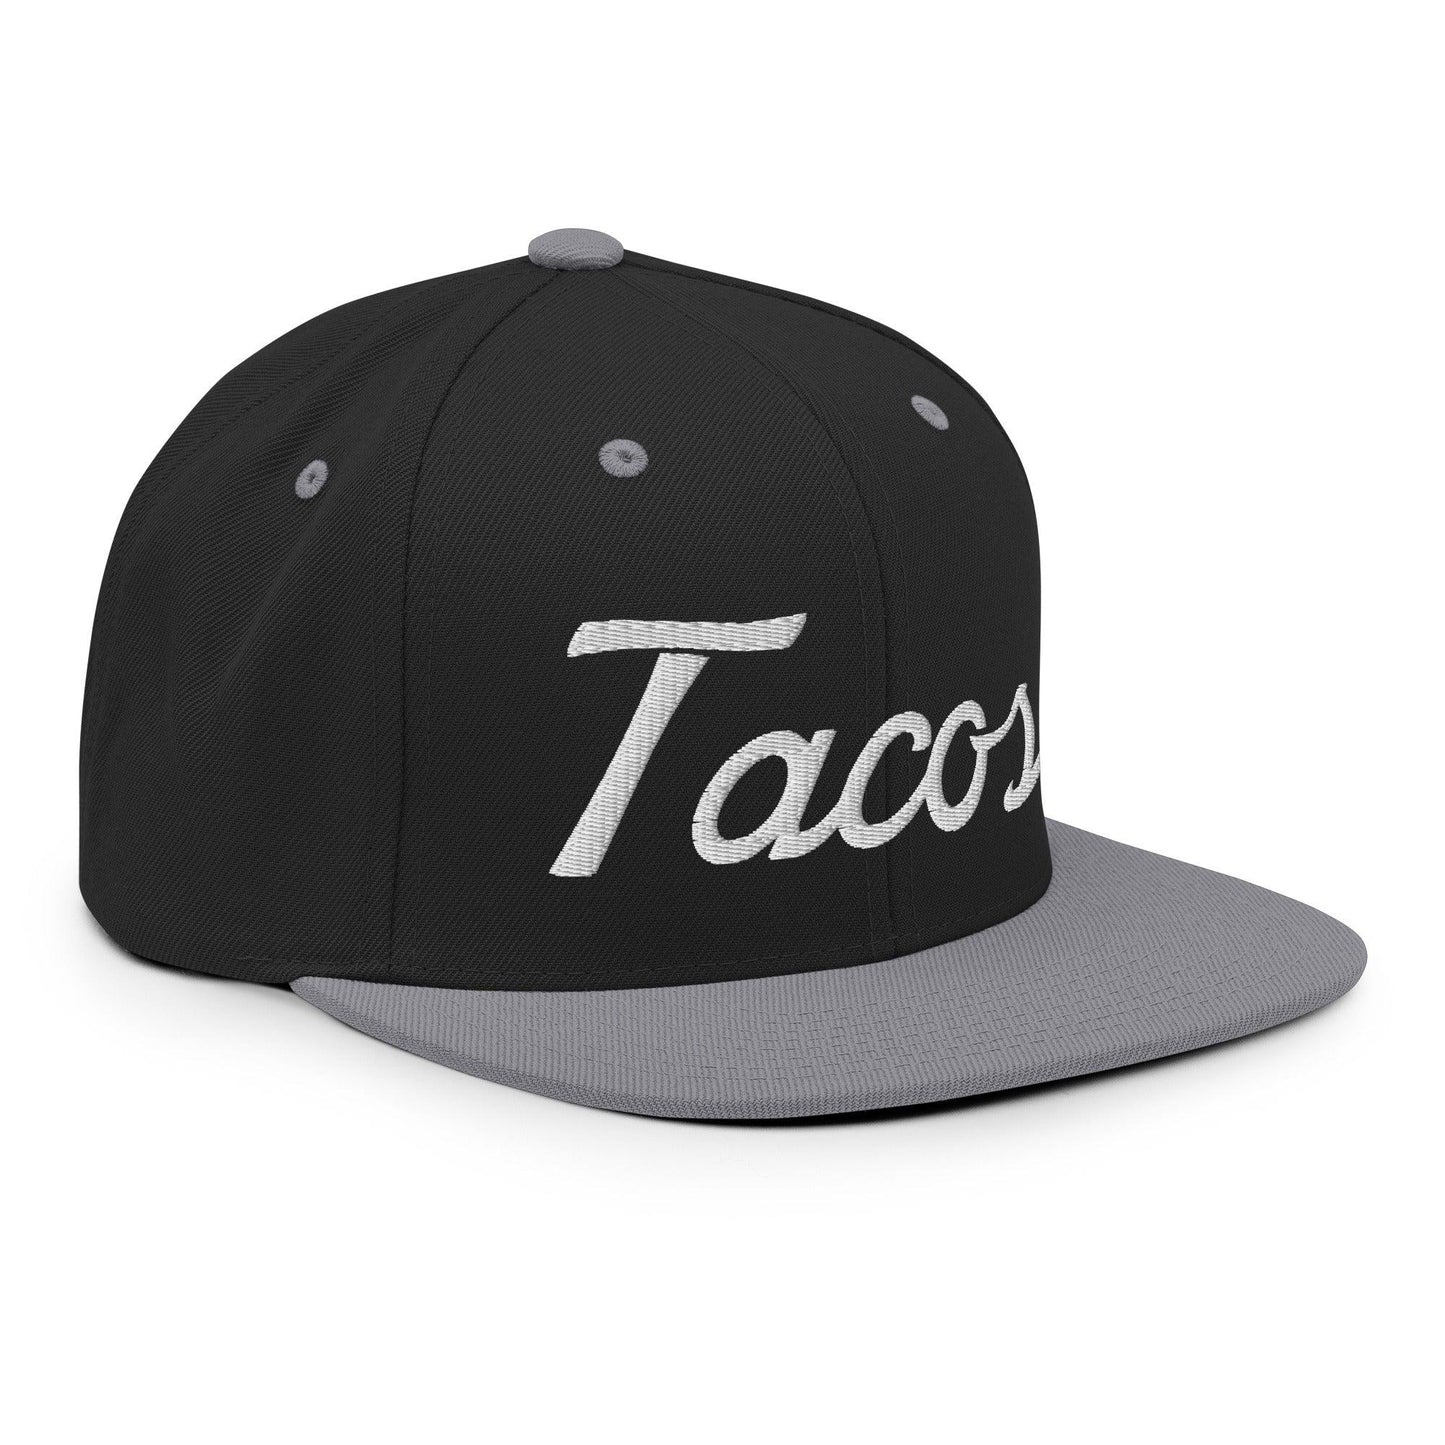 Tacos II Vintage Sports Script Snapback Hat Black Silver